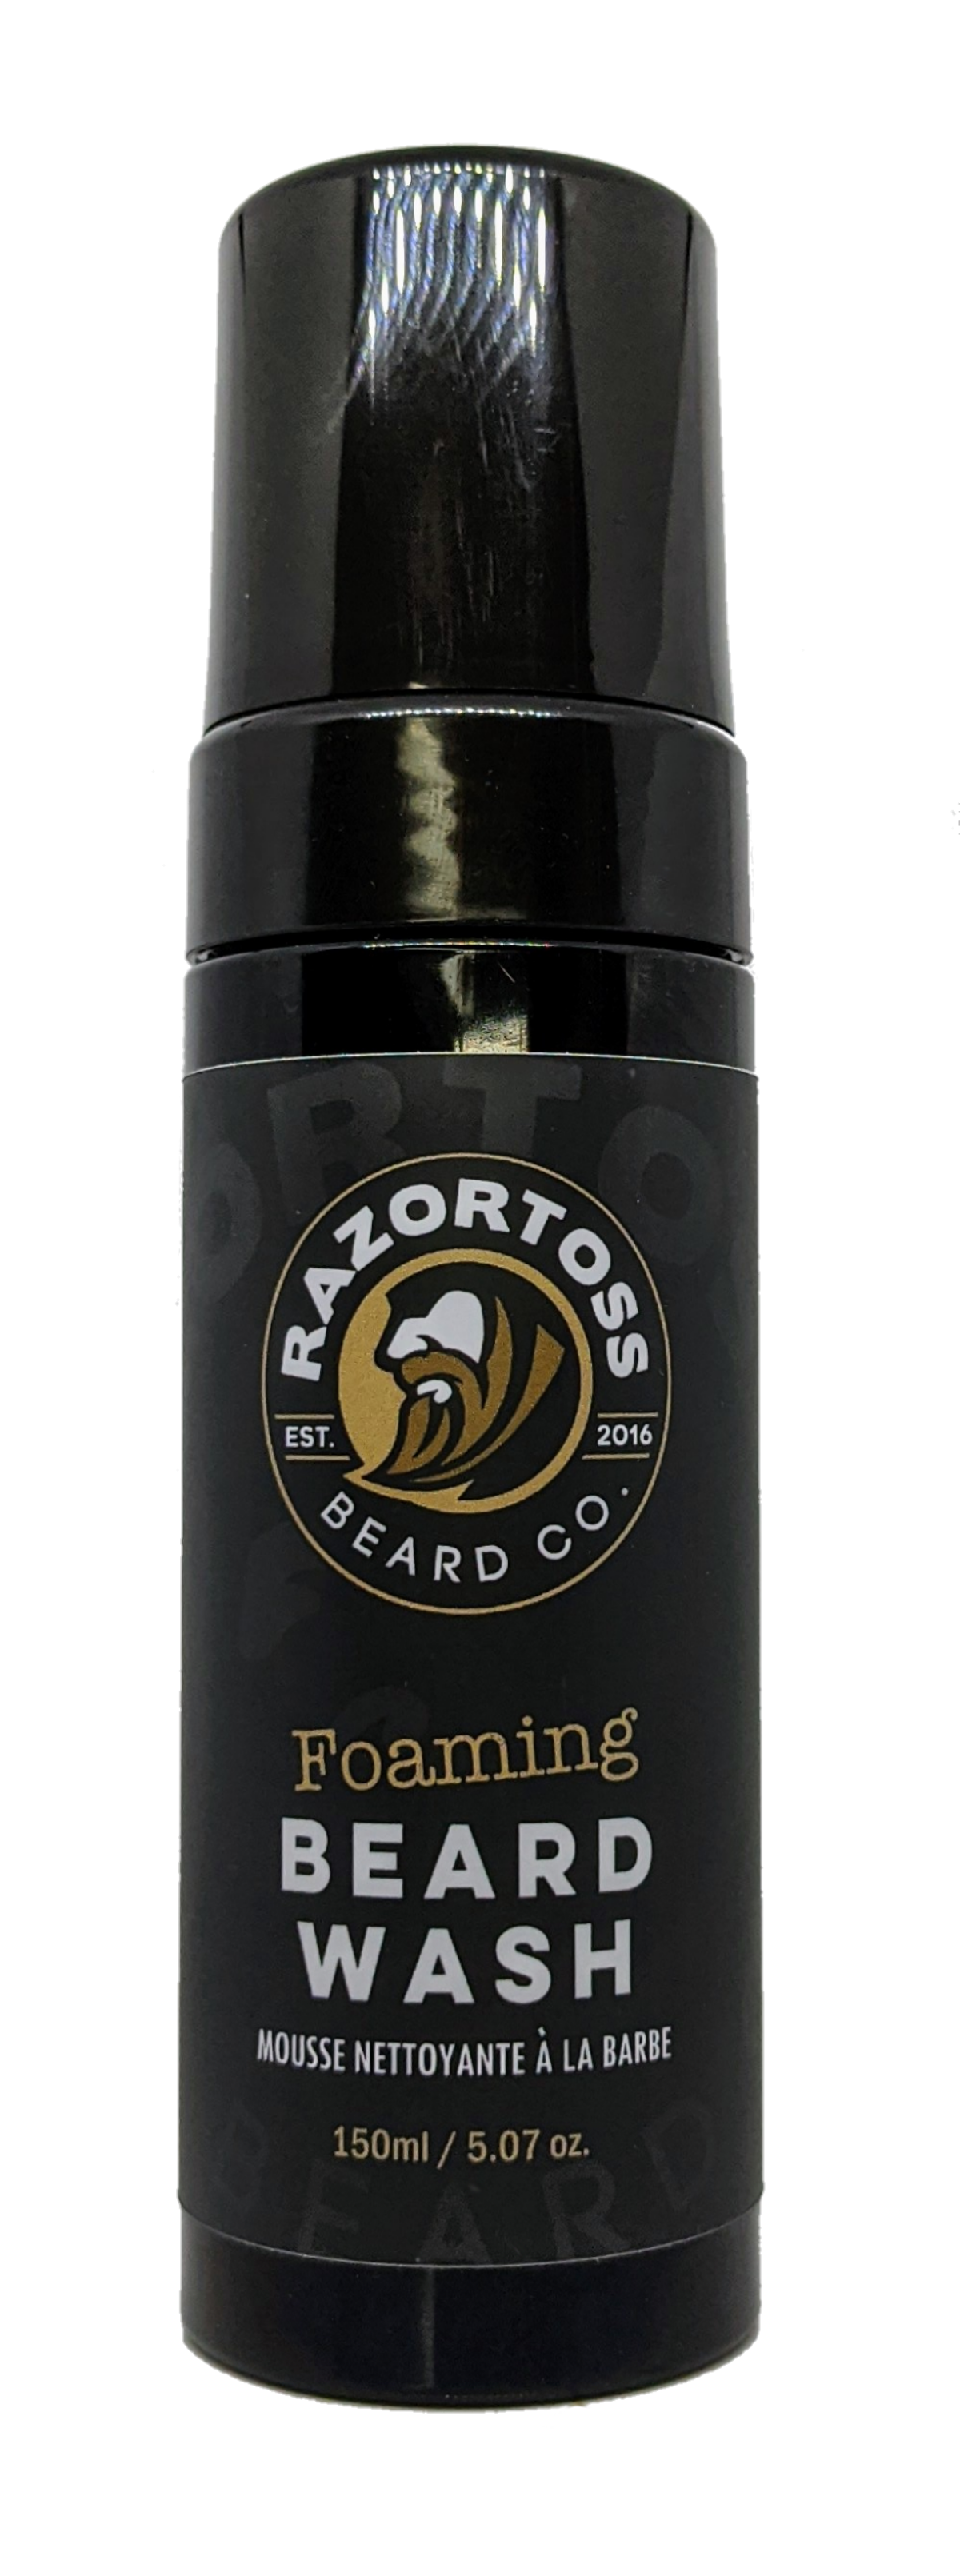 Foaming Beard Wash